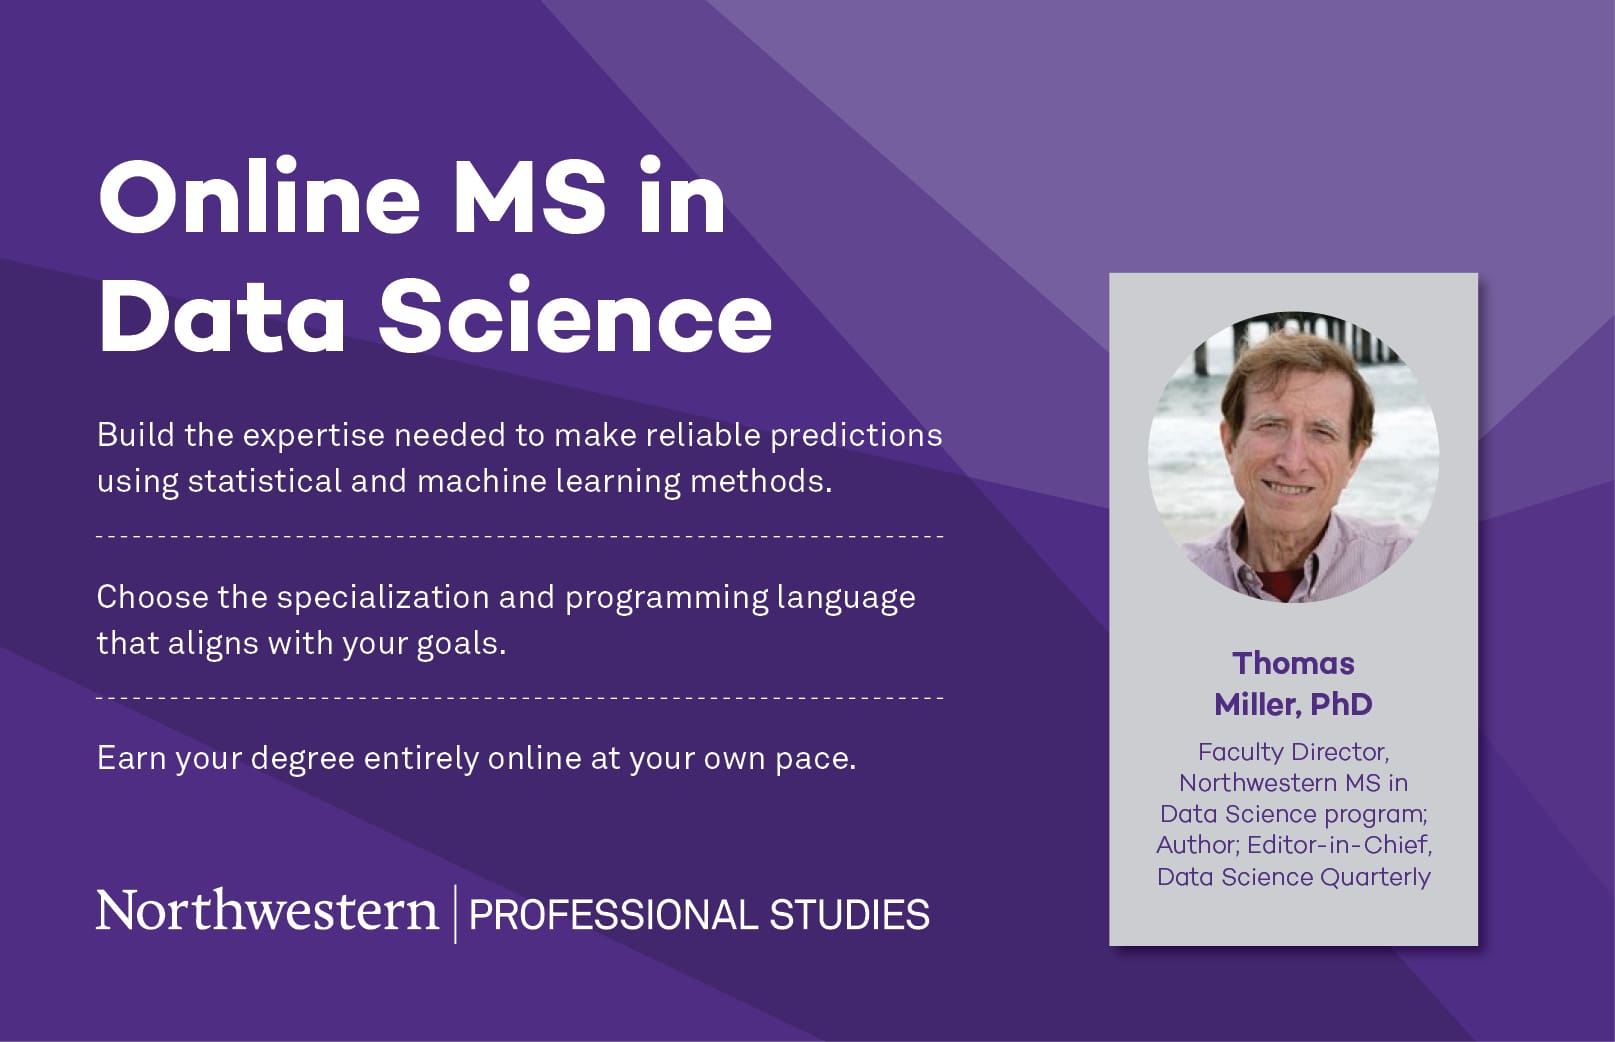 PhD Thomas Miller delves into Northwestern University’s Online Graduate Programs in Data Science.